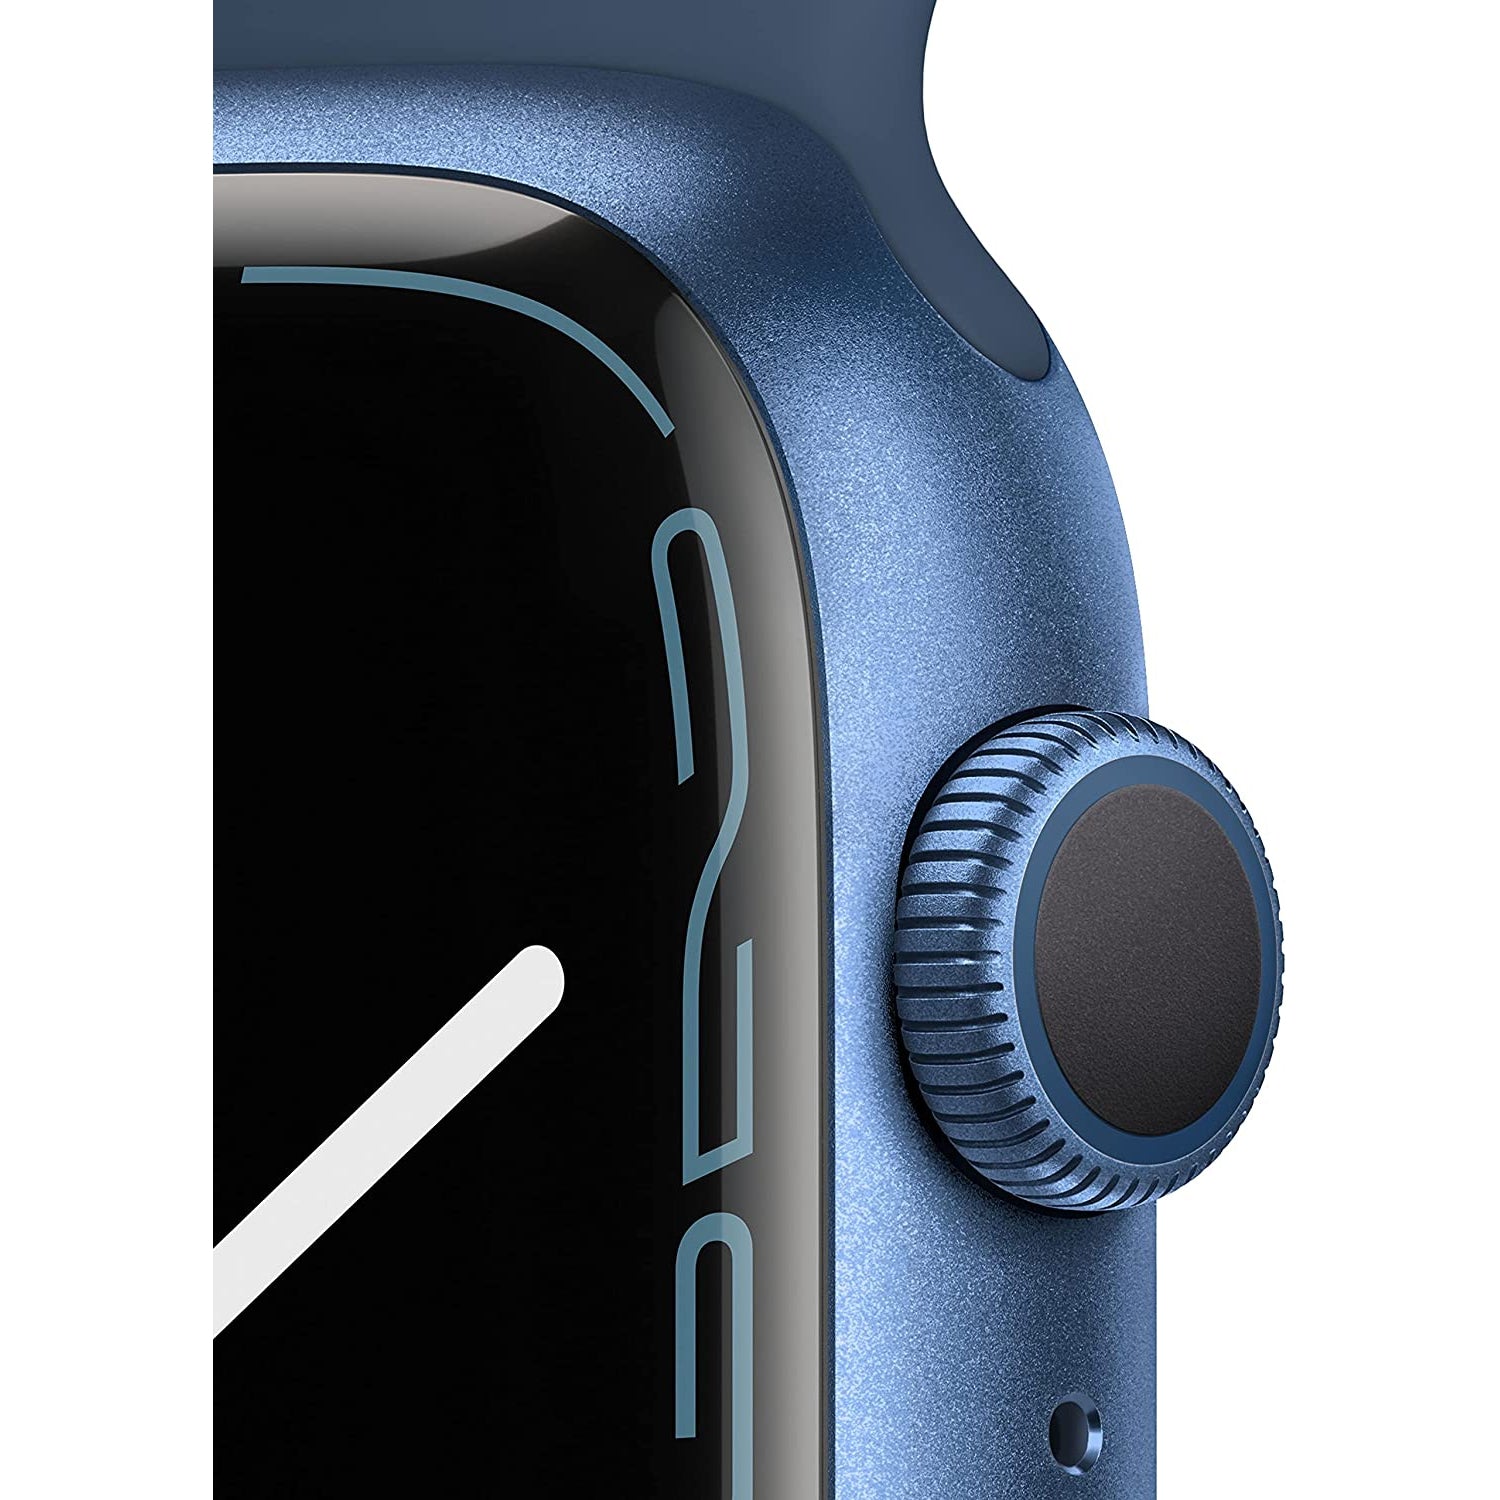 Apple Watch Series 7 41mm GPS Blue Aluminium Blue Sport Band - Refurbished Pristine